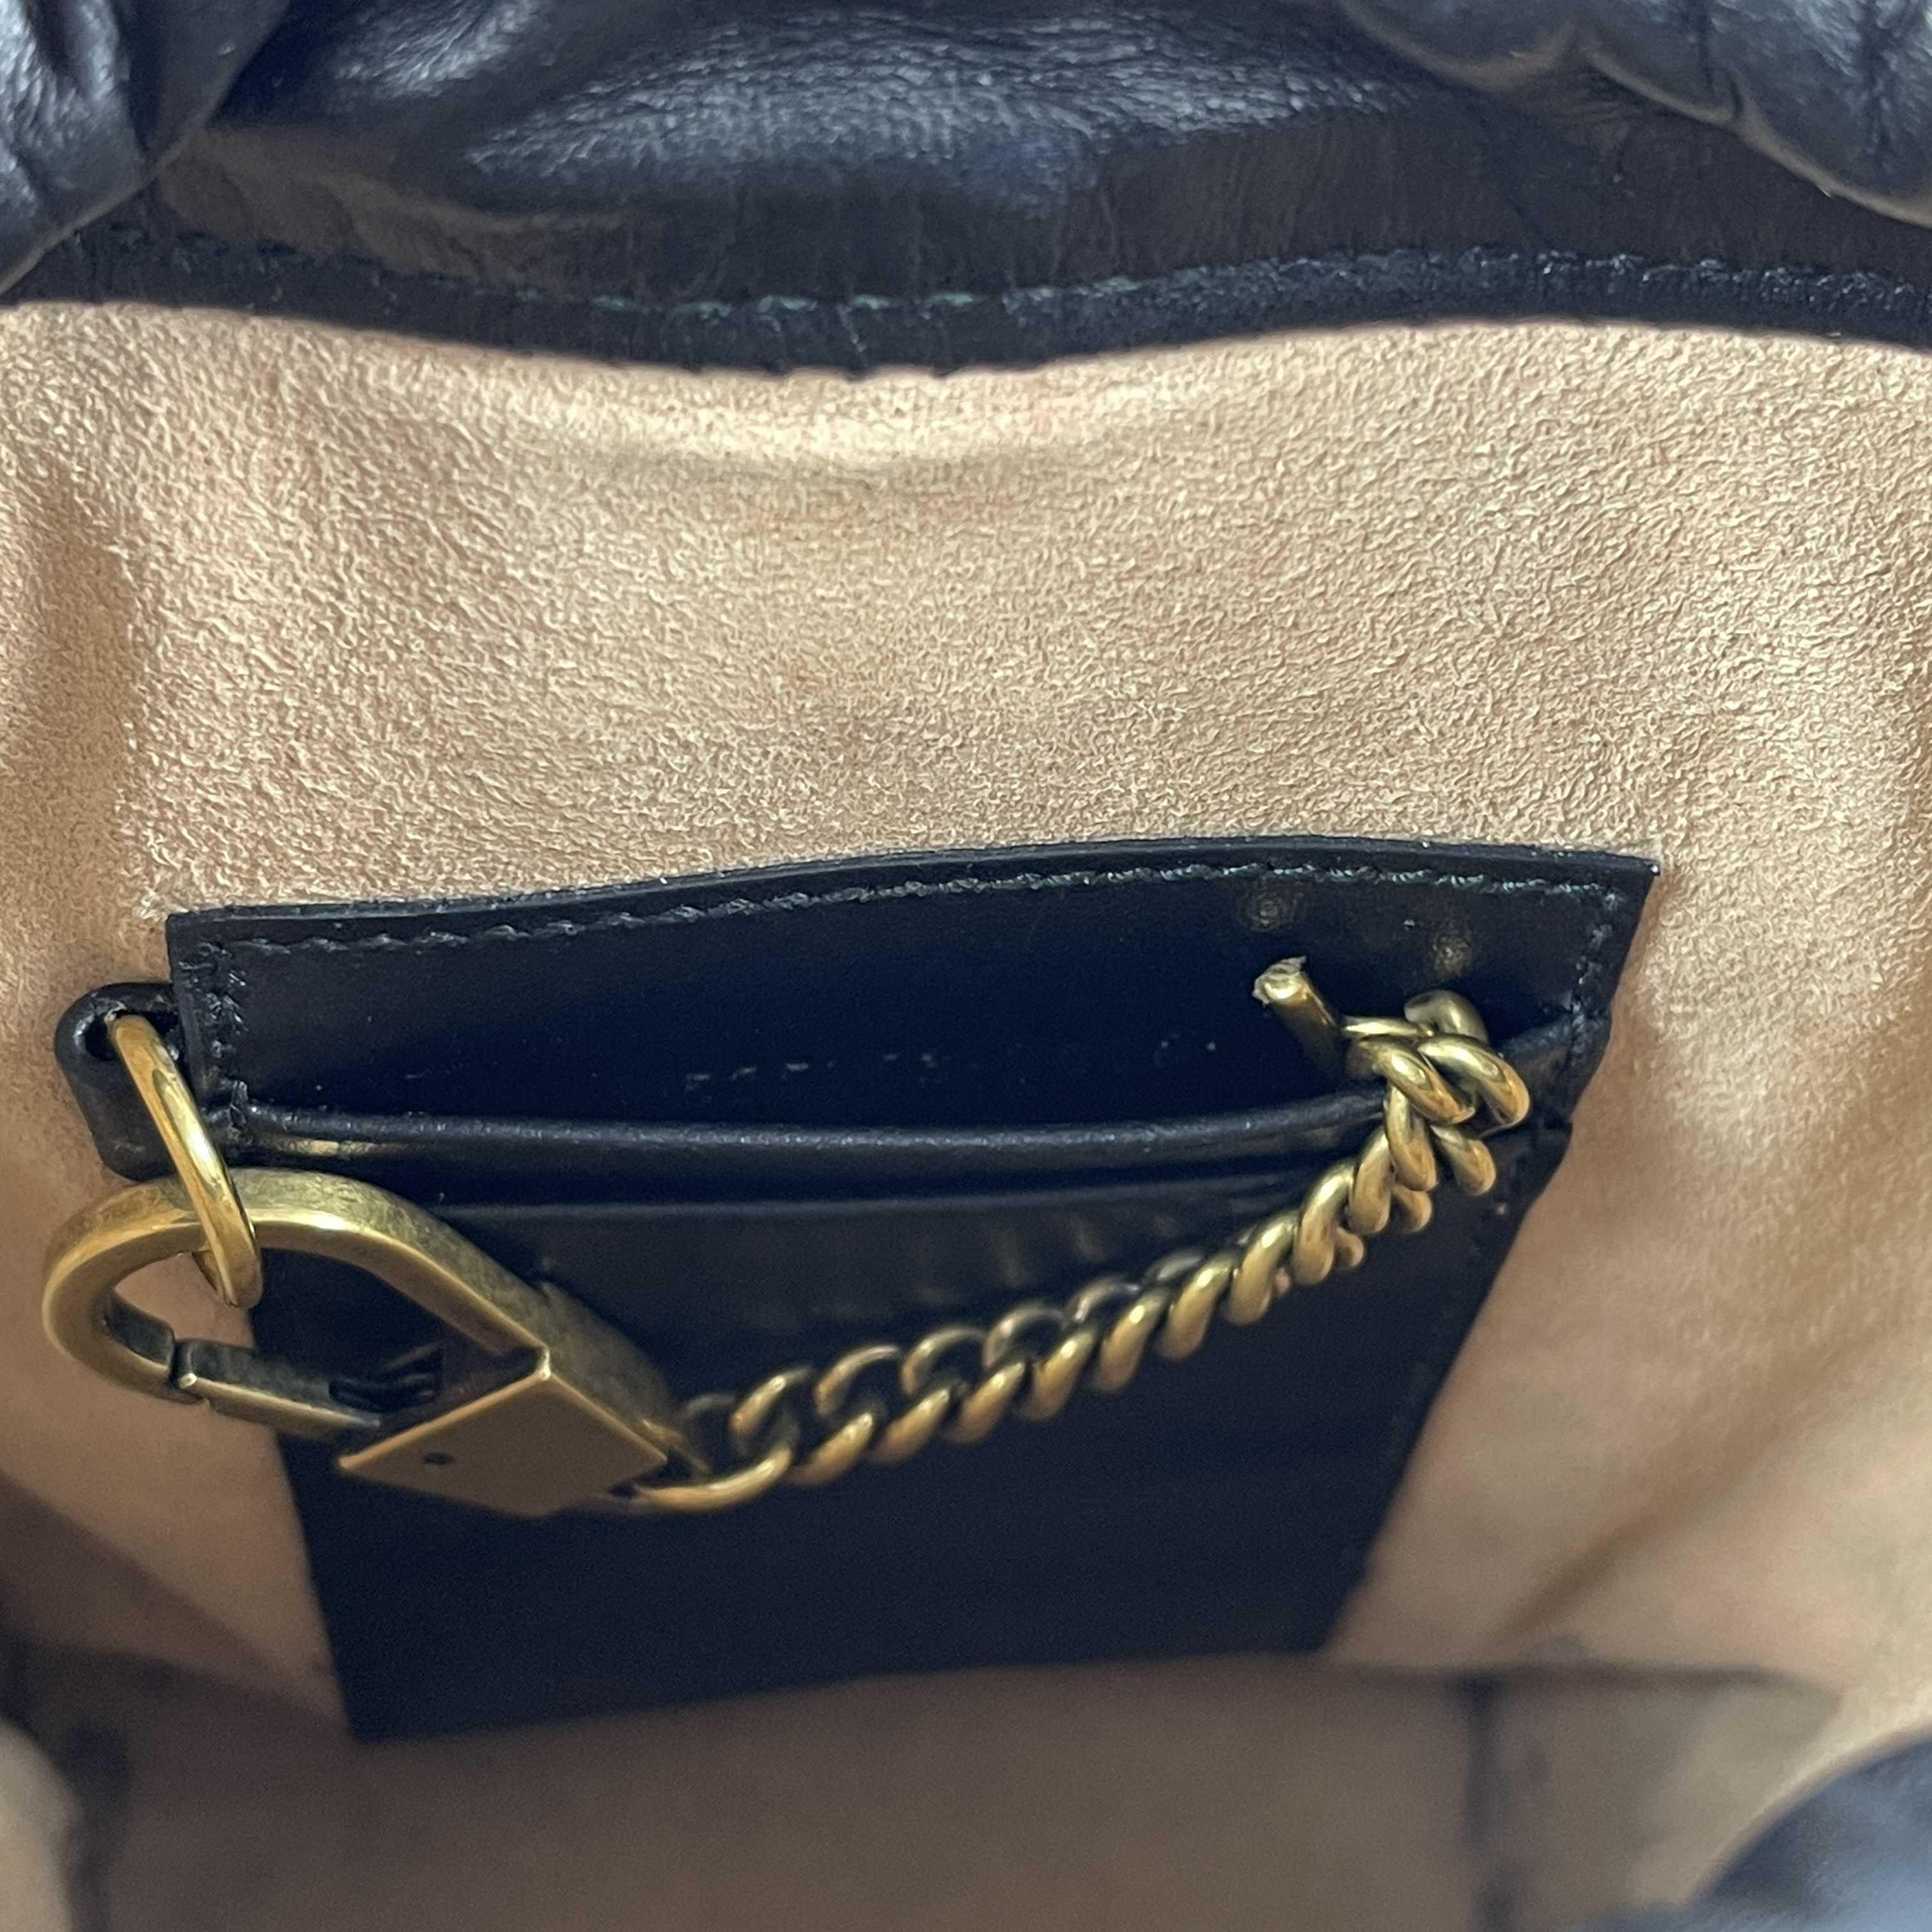 Gucci - Very Good - GG Marmont Bucket Bag Mini - Black - Handbag 2